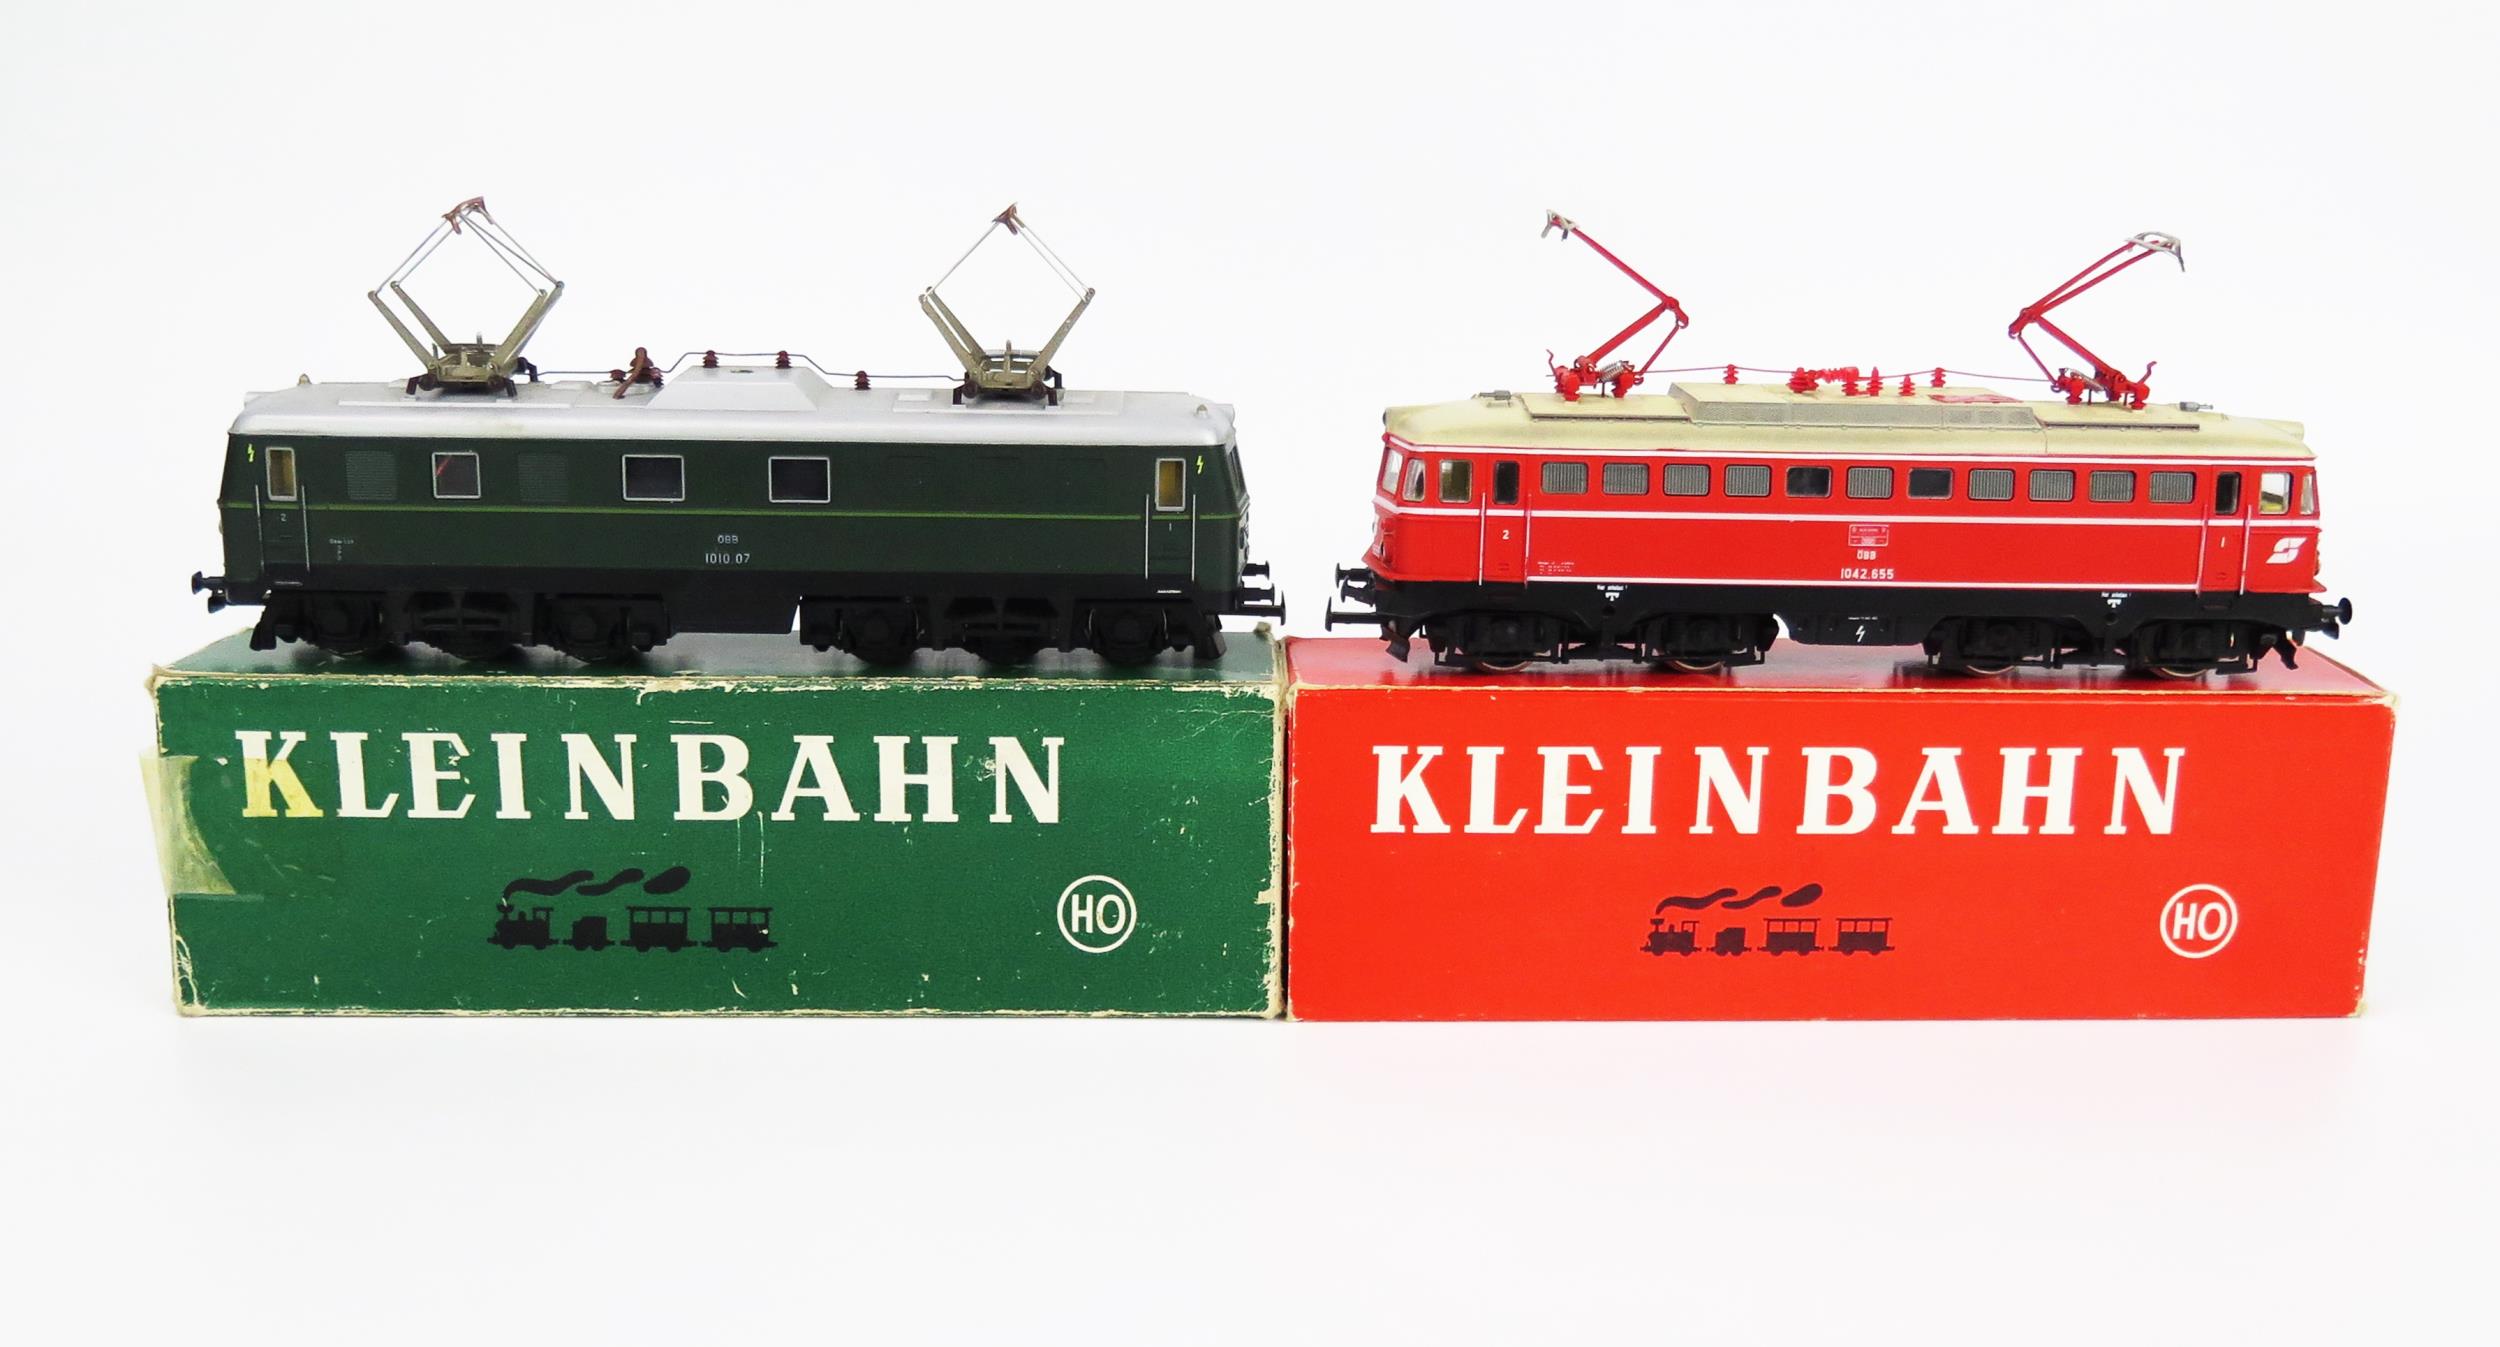 Kleinbahn (Austria) HO / OO Gauge Overhead twin motor electric locos - 1010 and OBB 1042 - excellent